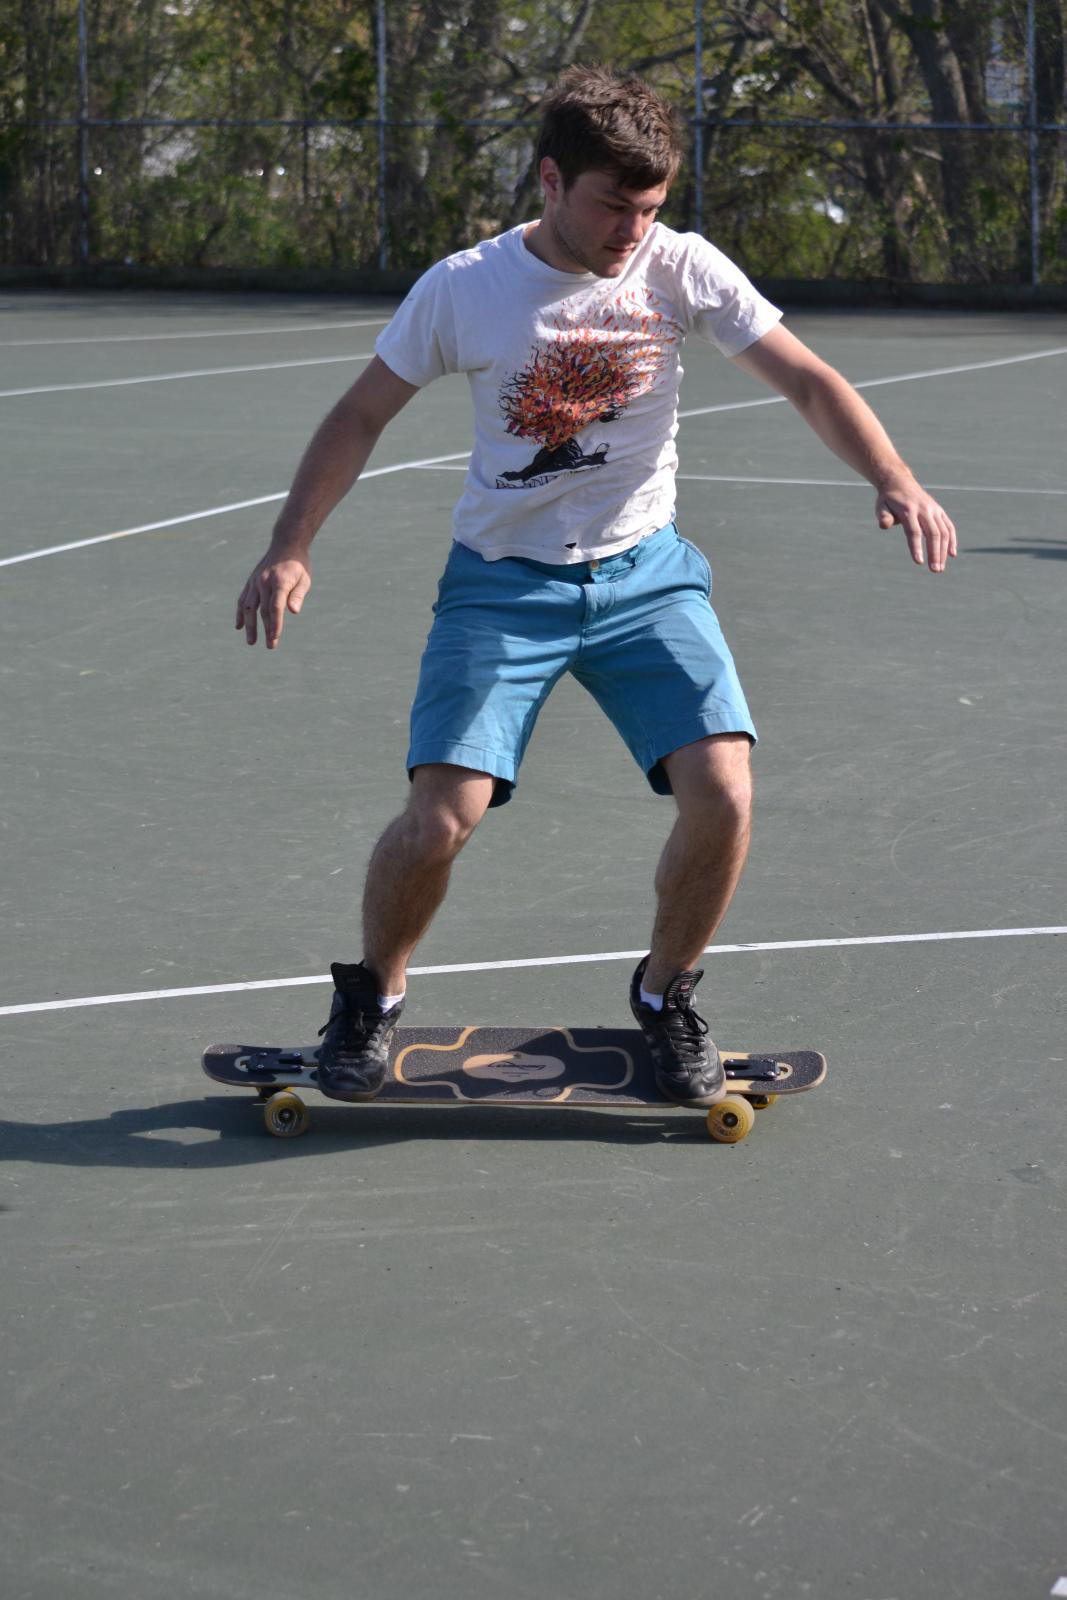 man riding a skateboard on a concrete surface